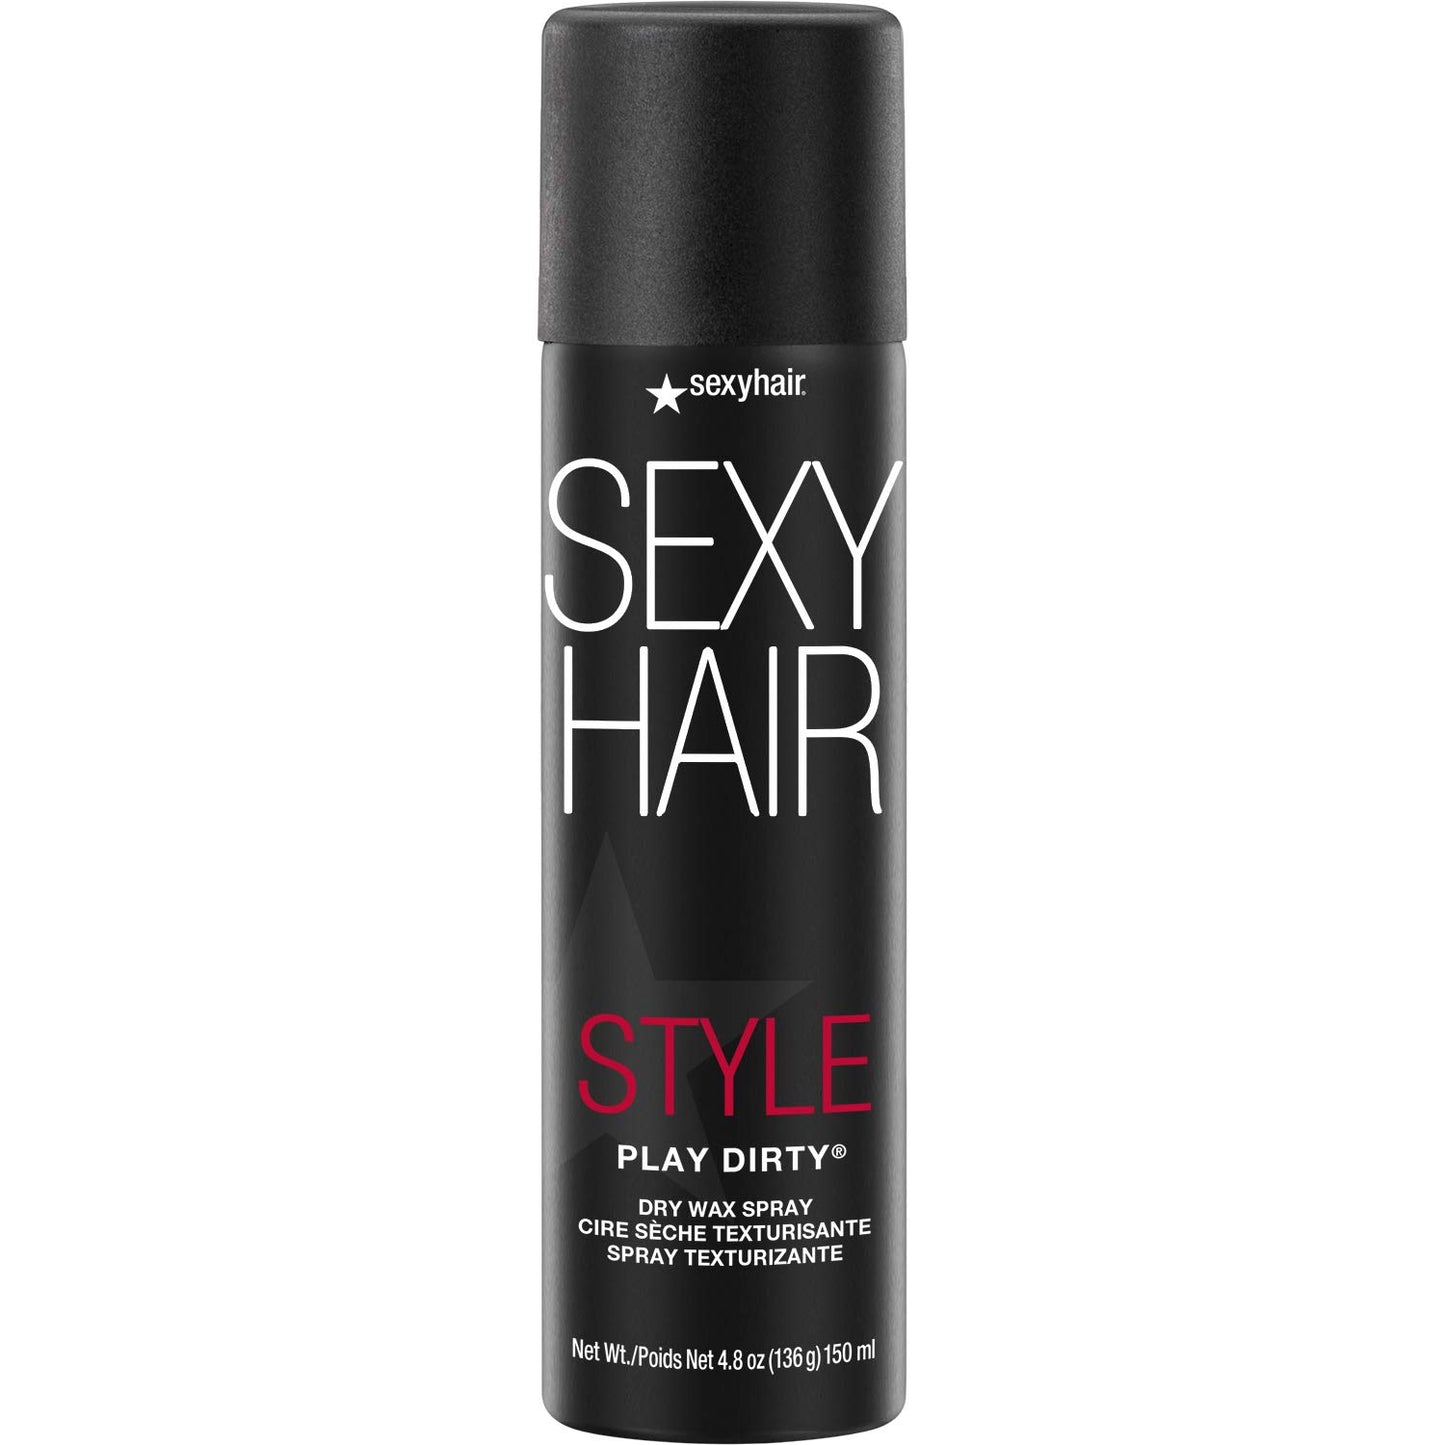 Style Sexy Hair Play Dirty Dry Wax Spray 4.8 oz